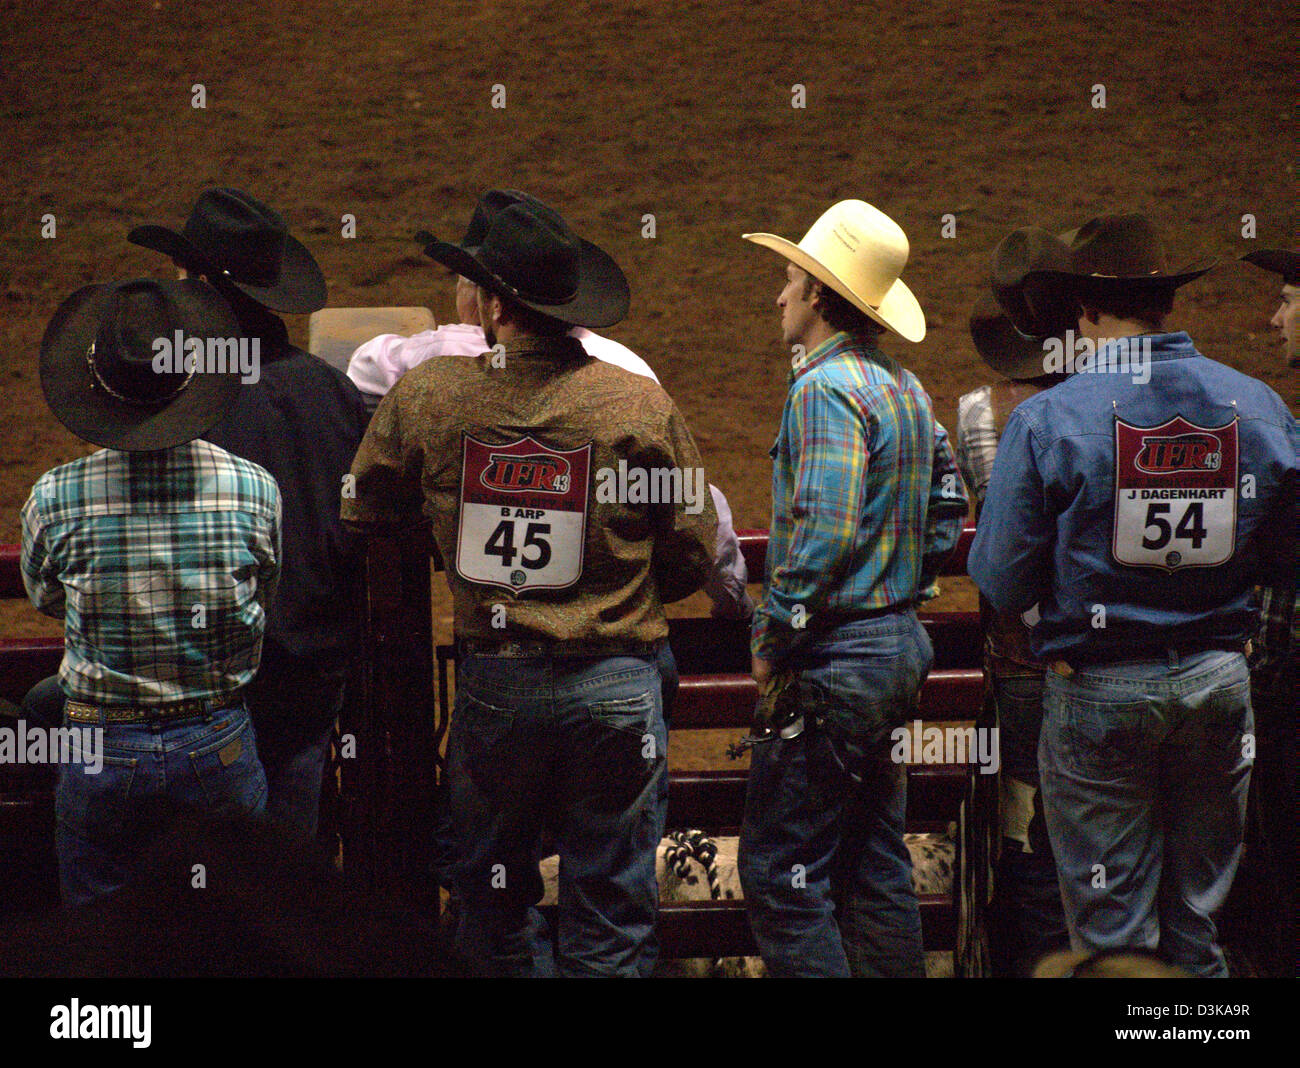 Cowboys at the National Finals Rodeo in Oklahoma City, Oklahoma, USA Stock Photo